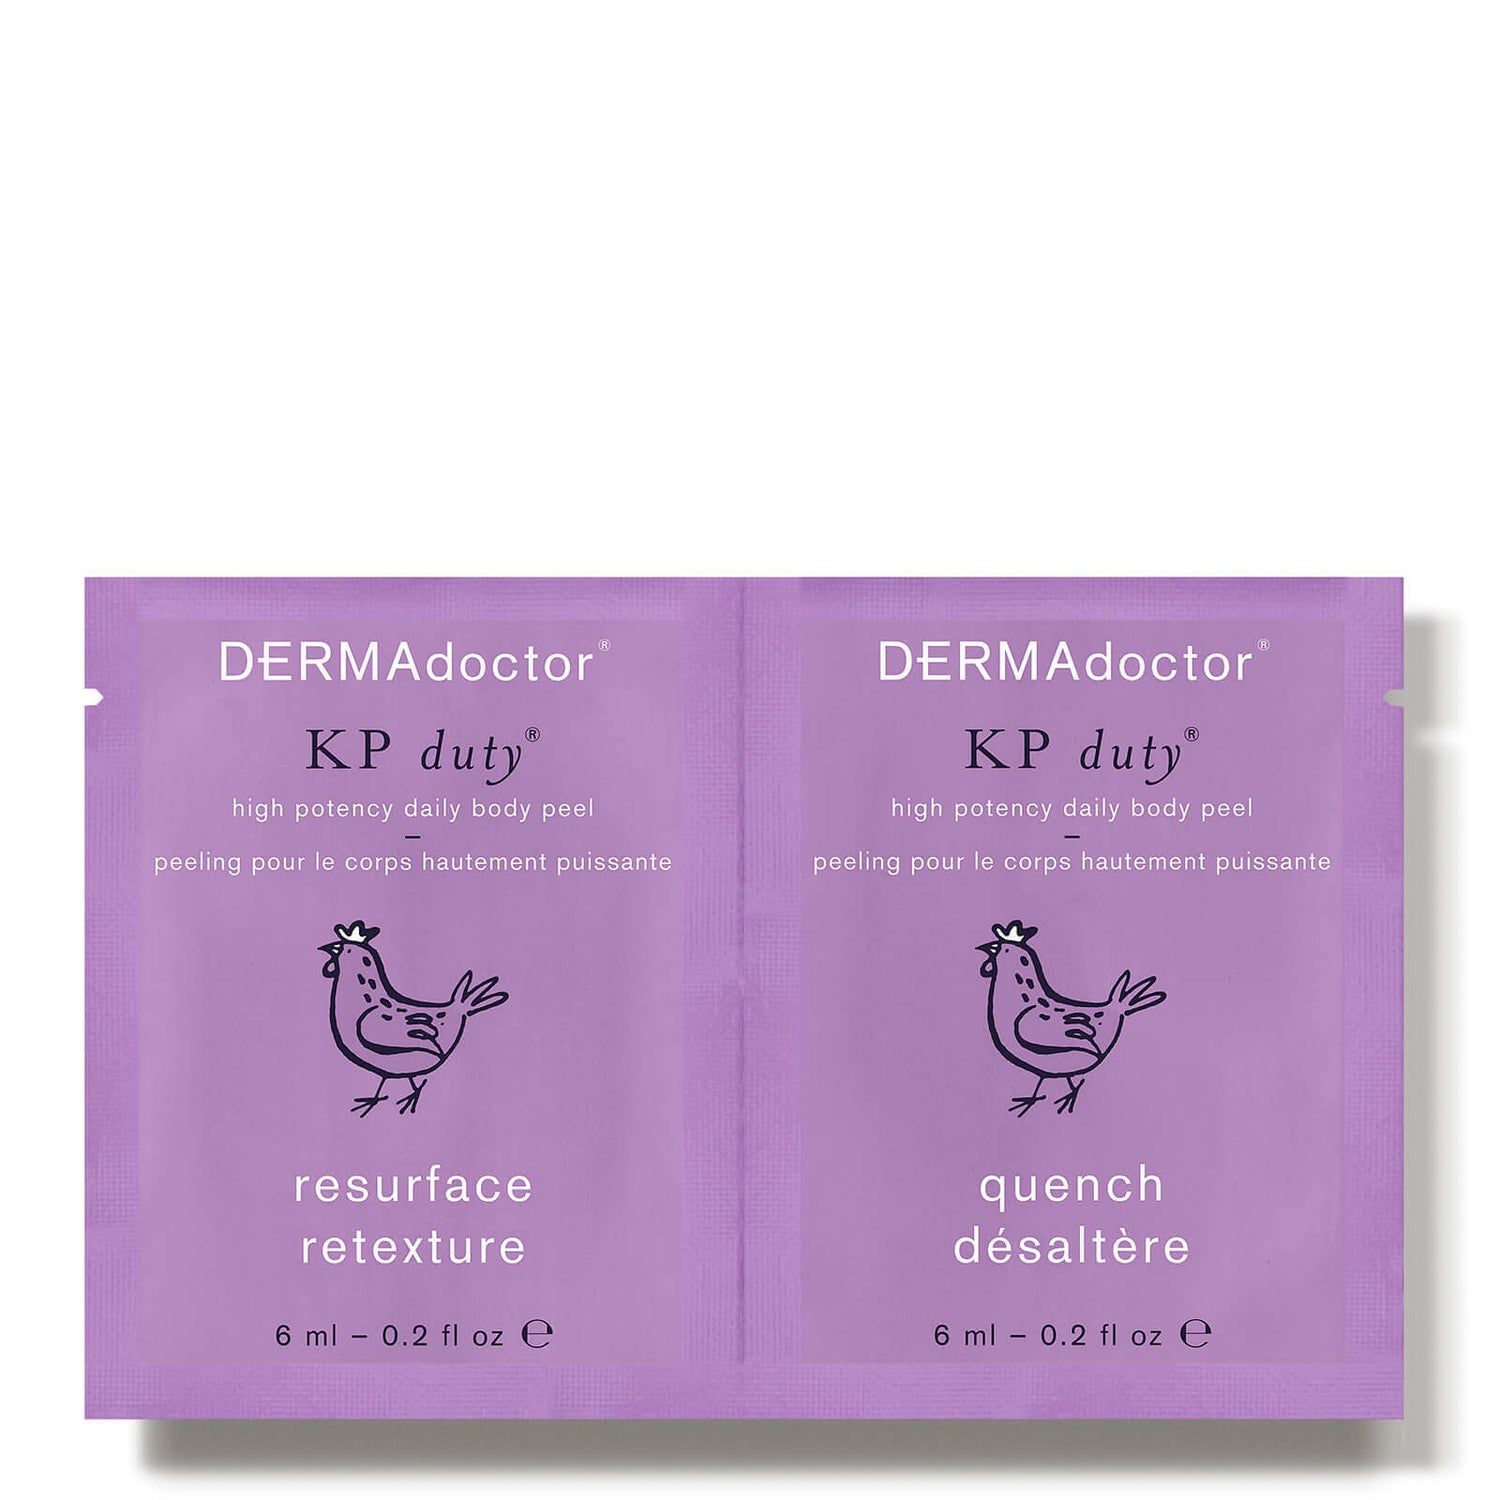 DERMAdoctor KP Duty High Potency Daily Body Peel